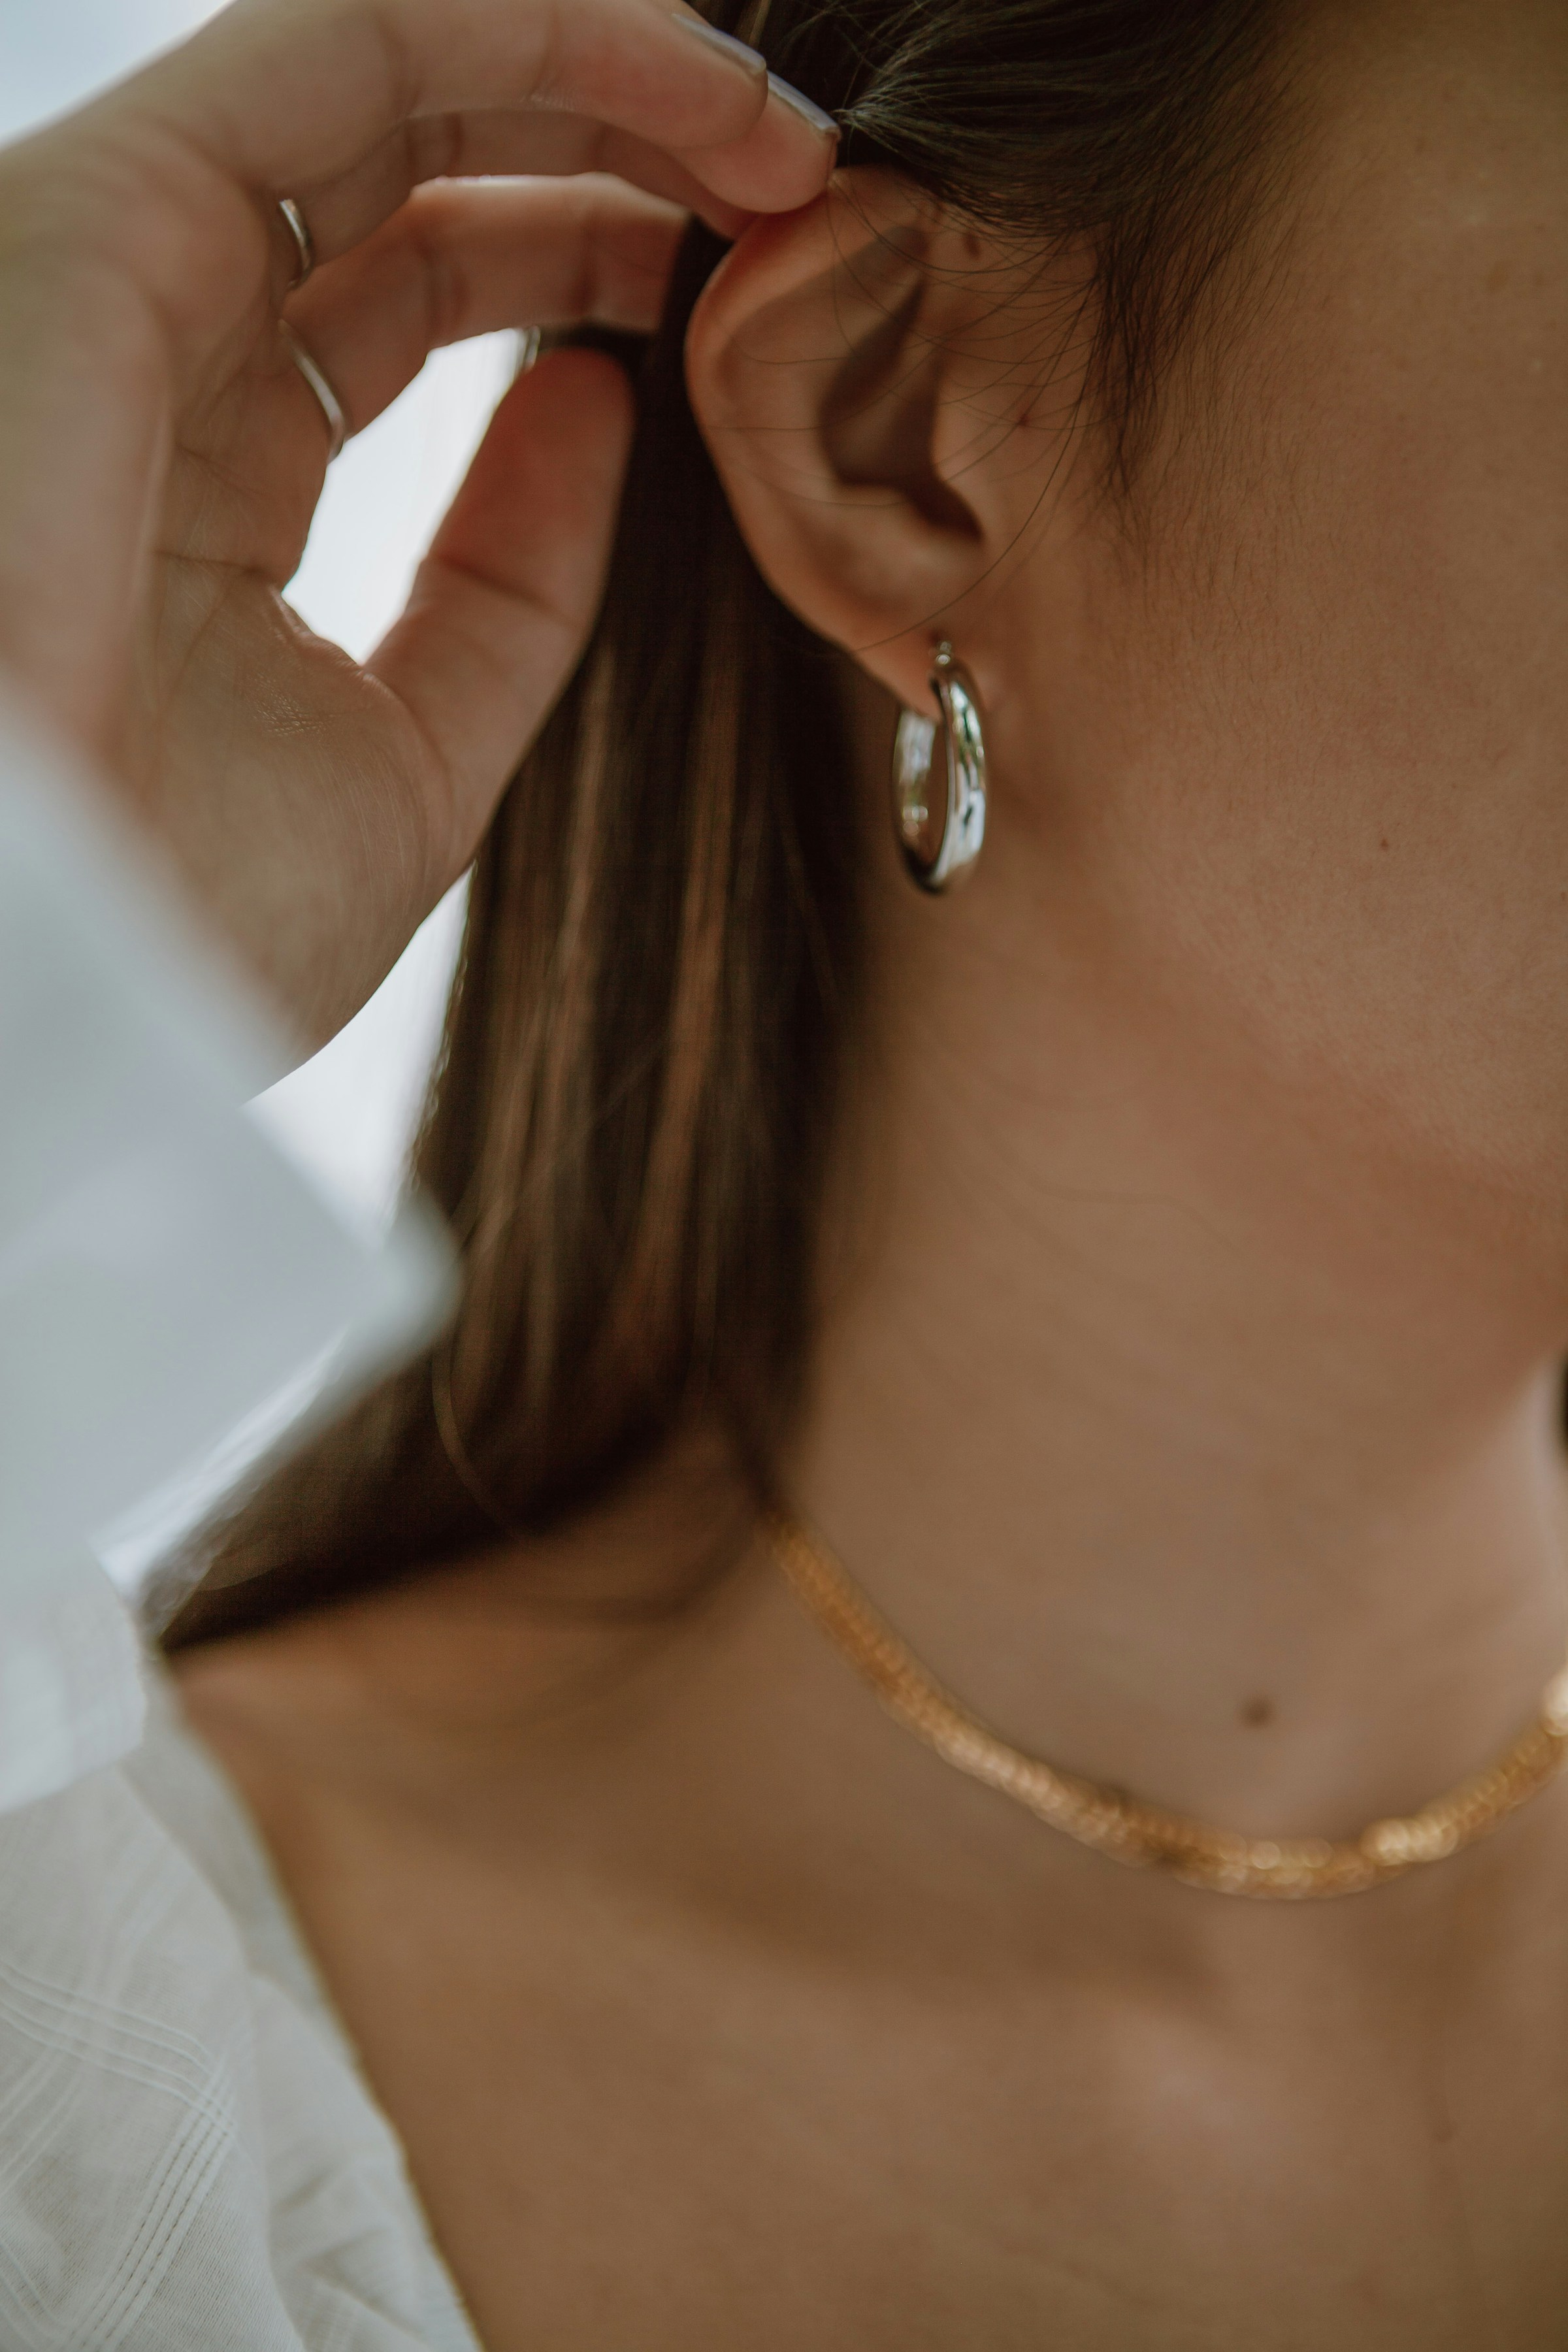 A woman showing off her earrings | Source: Unsplash